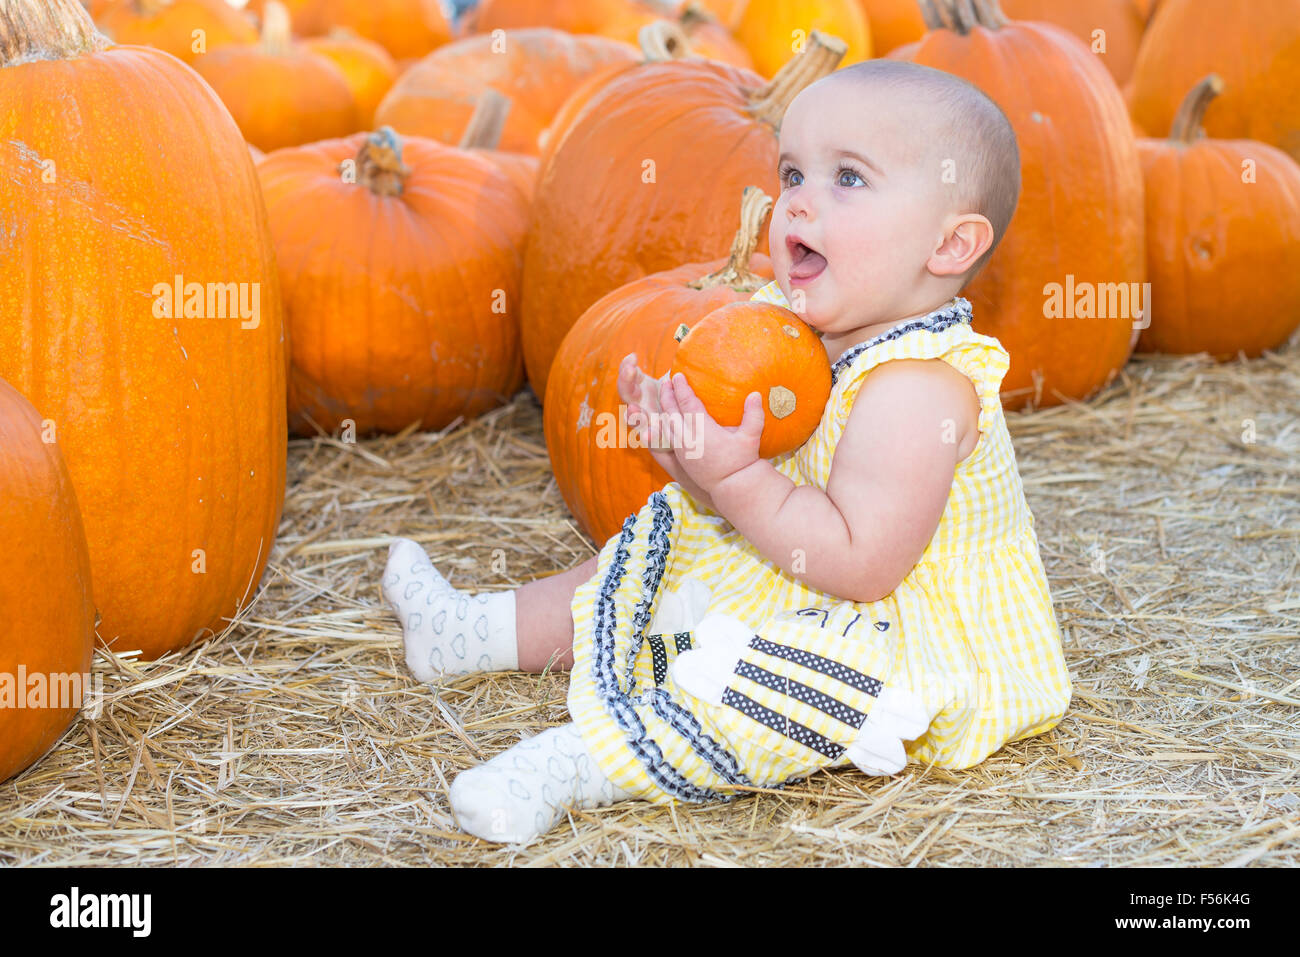 Baby girl holding a pumpkin in a pumpkin patch Stock Photo